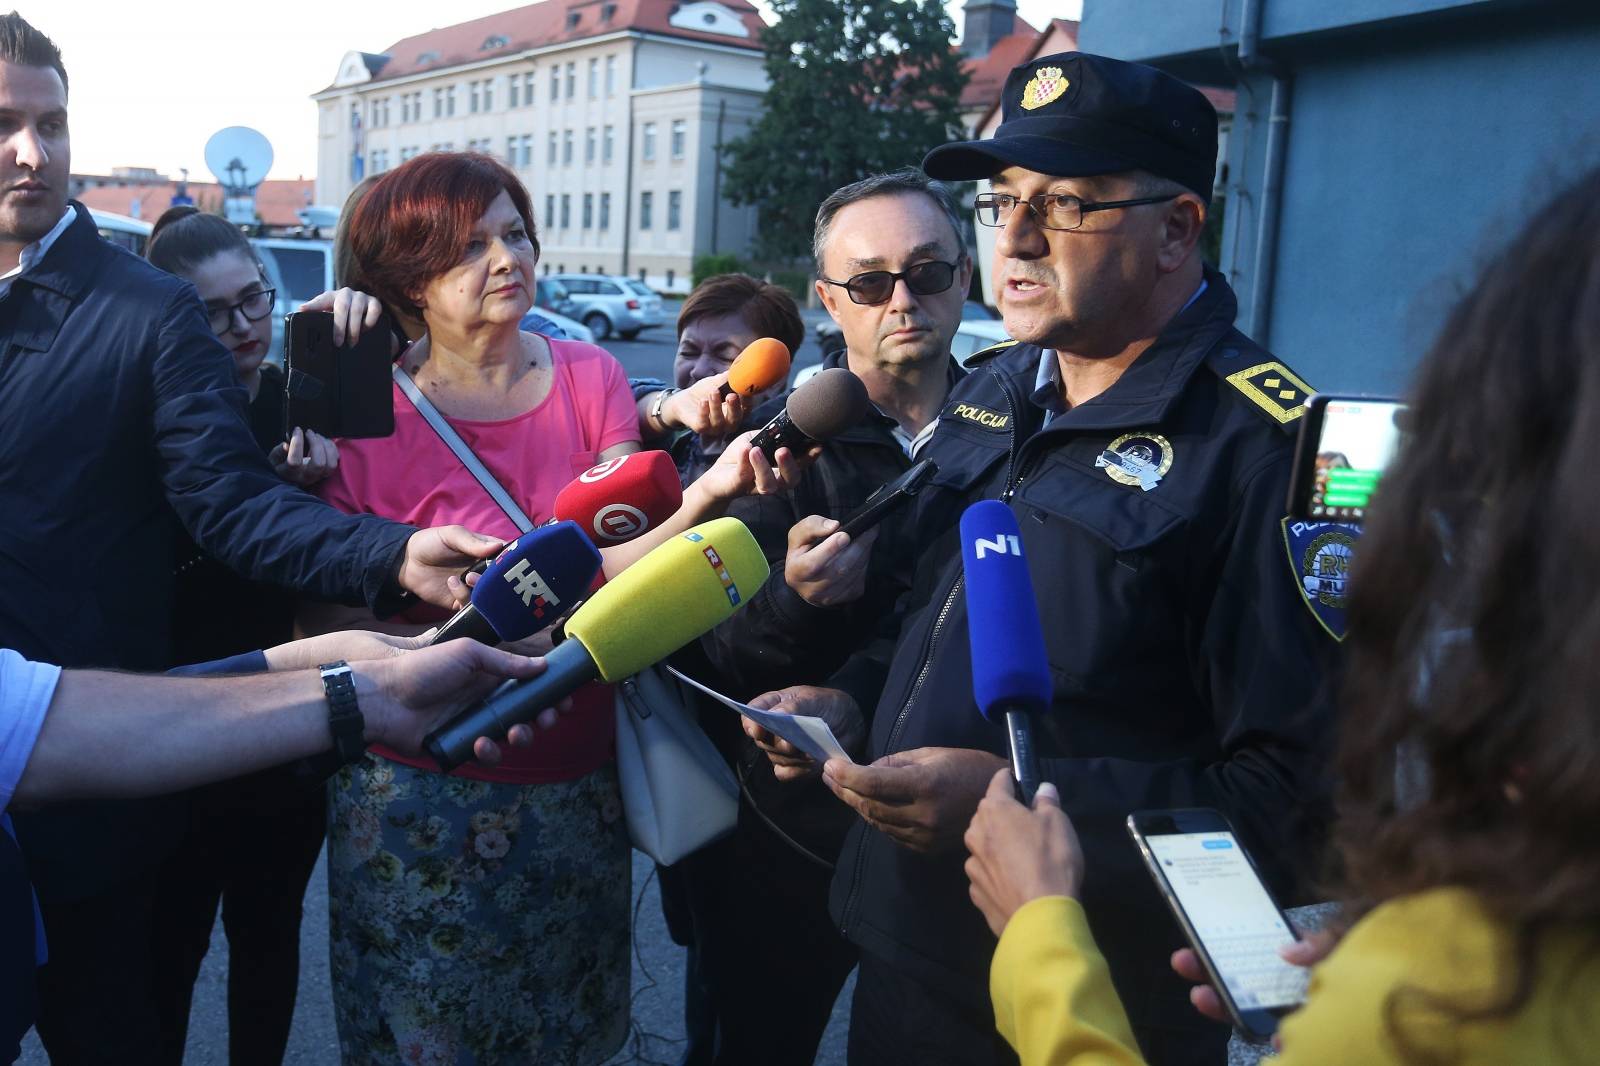 Äakovo: Zbog ubojstva pokrenut disciplinski postupak protiv 4 policajca, smijenjen naÄelnik